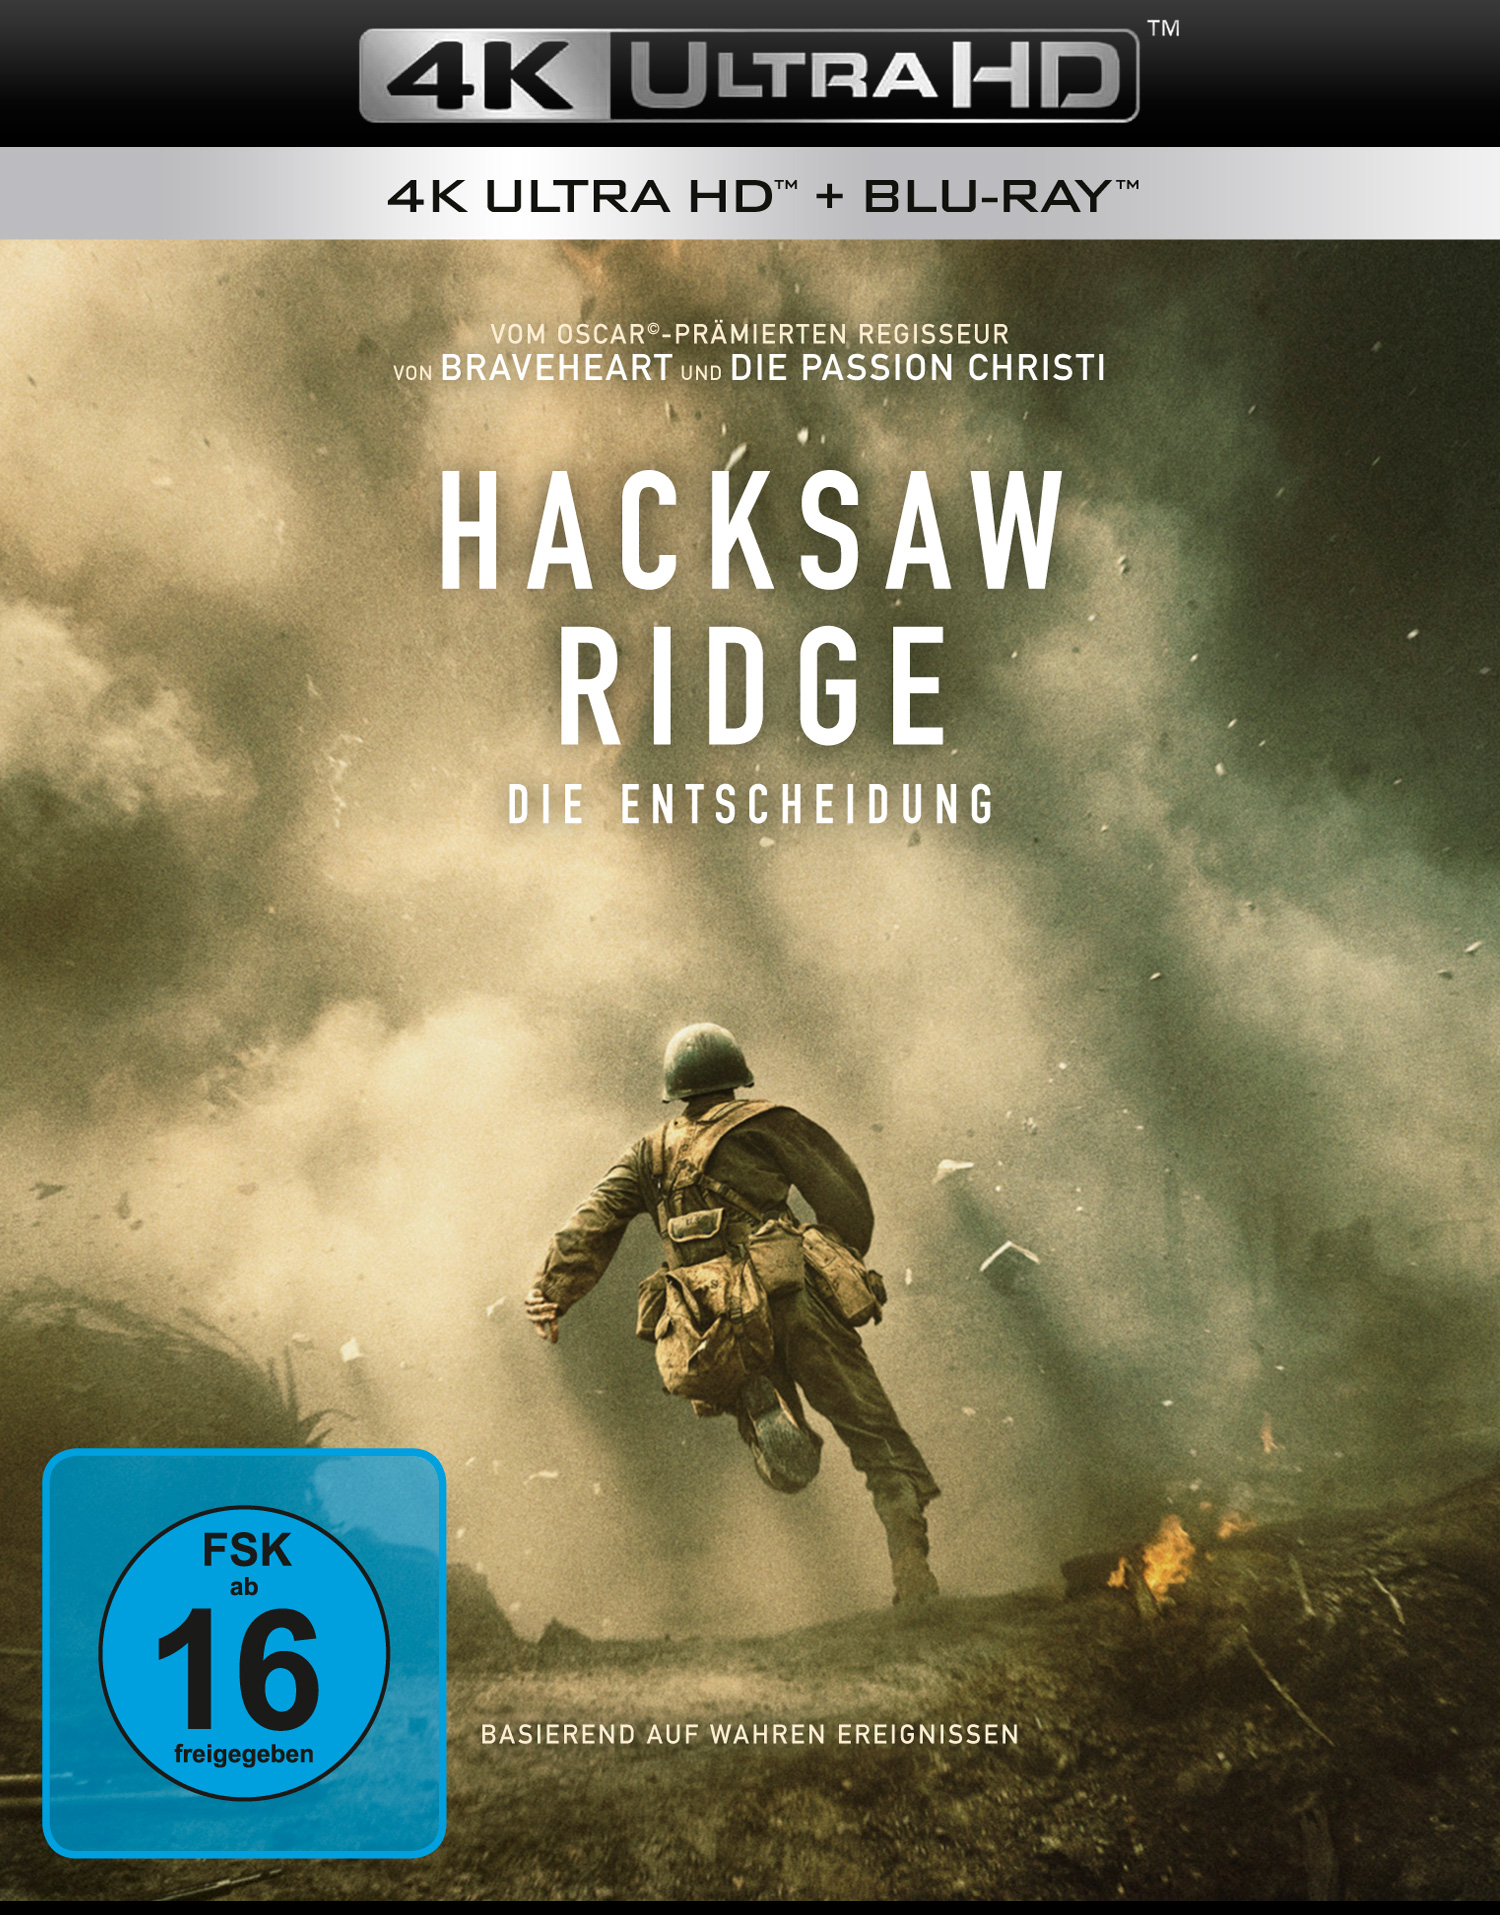 + Ridge Entscheidung - Ultra HD Hacksaw 4K Blu-ray Blu-ray Die